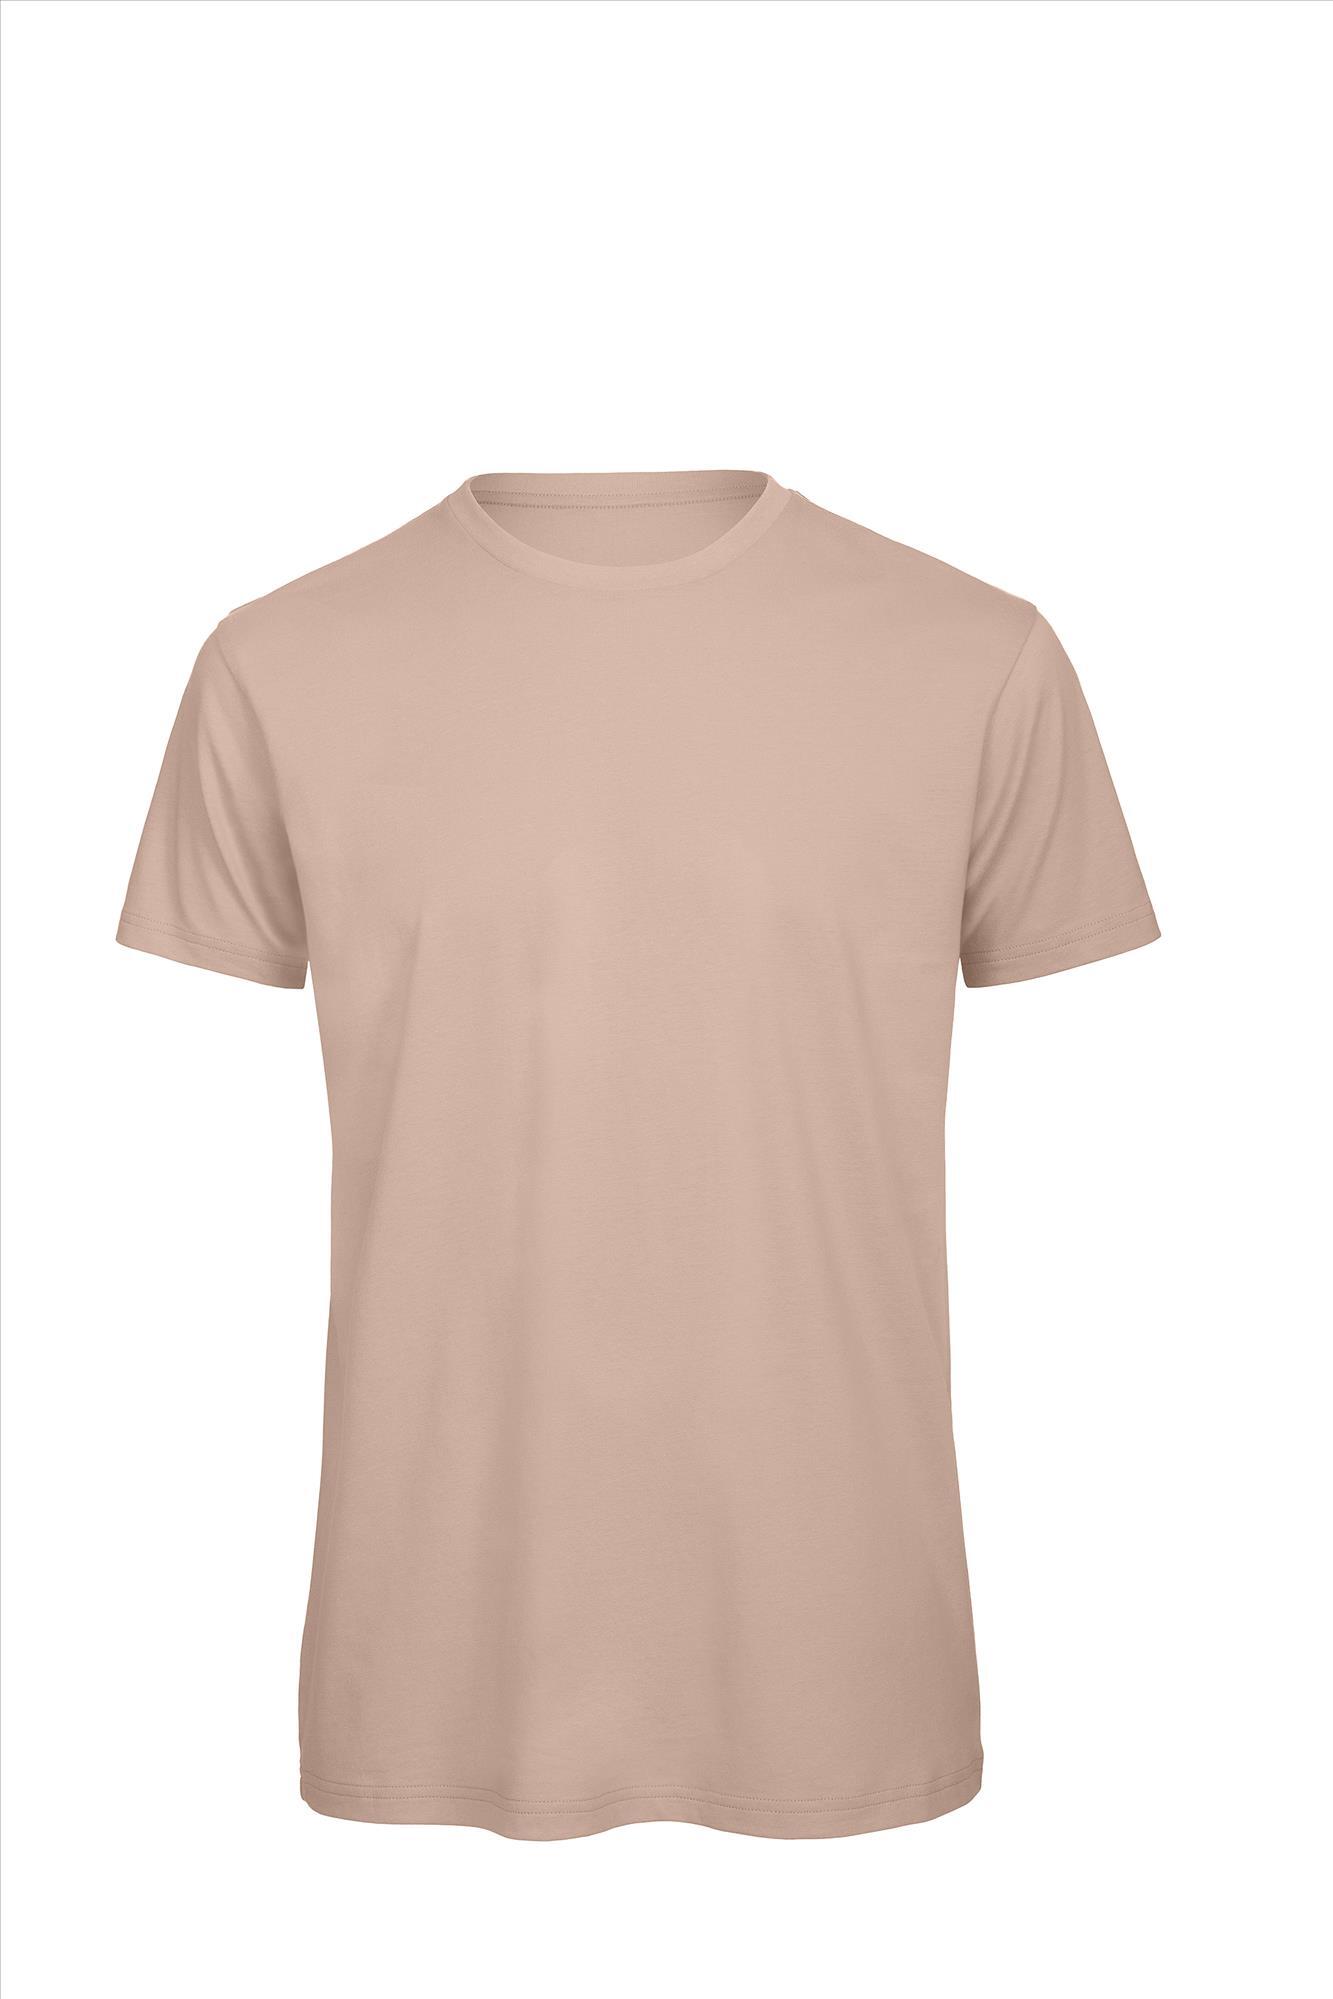 Heren T-shirt millennial roze te personaliseren bedrukbaar duurzaam shirt